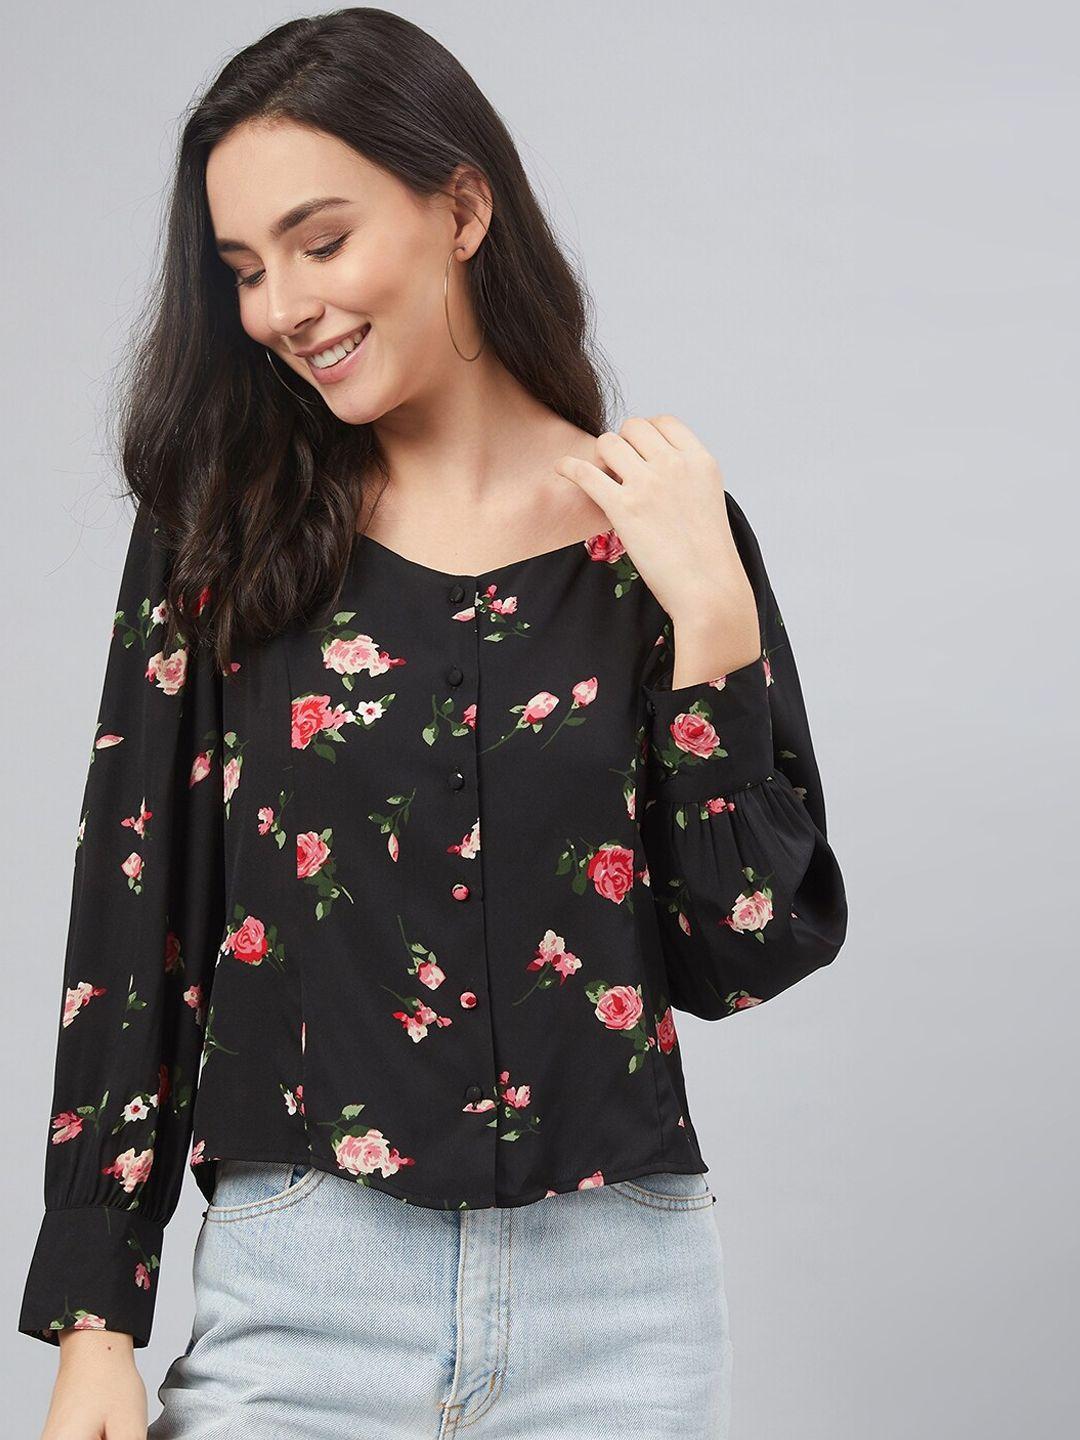 rare women black & pink floral printed shirt style top